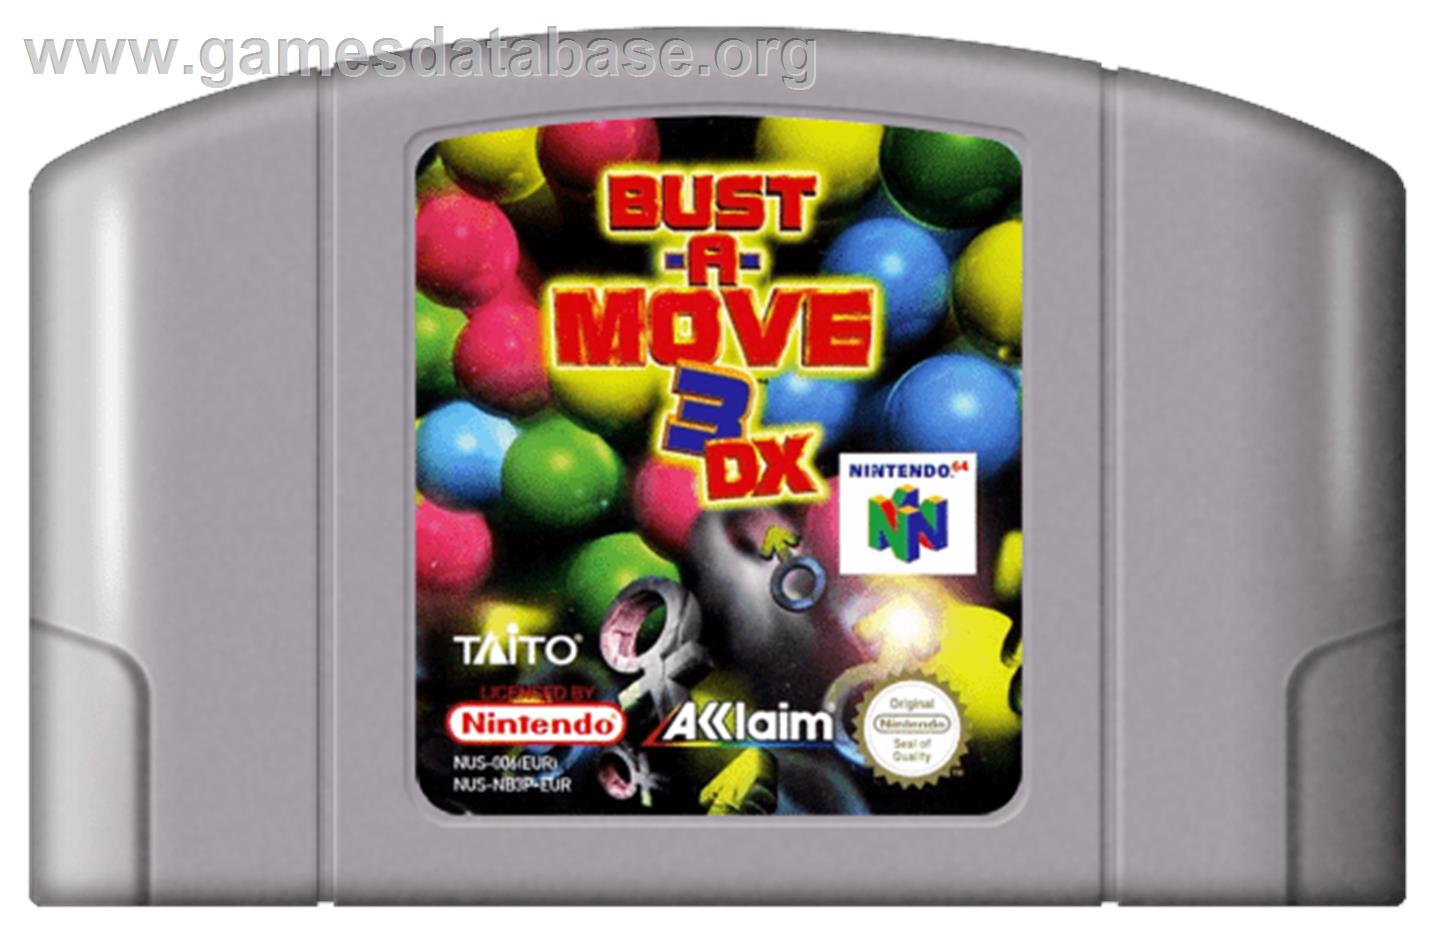 Bust a Move 3 DX - Nintendo N64 - Artwork - Cartridge